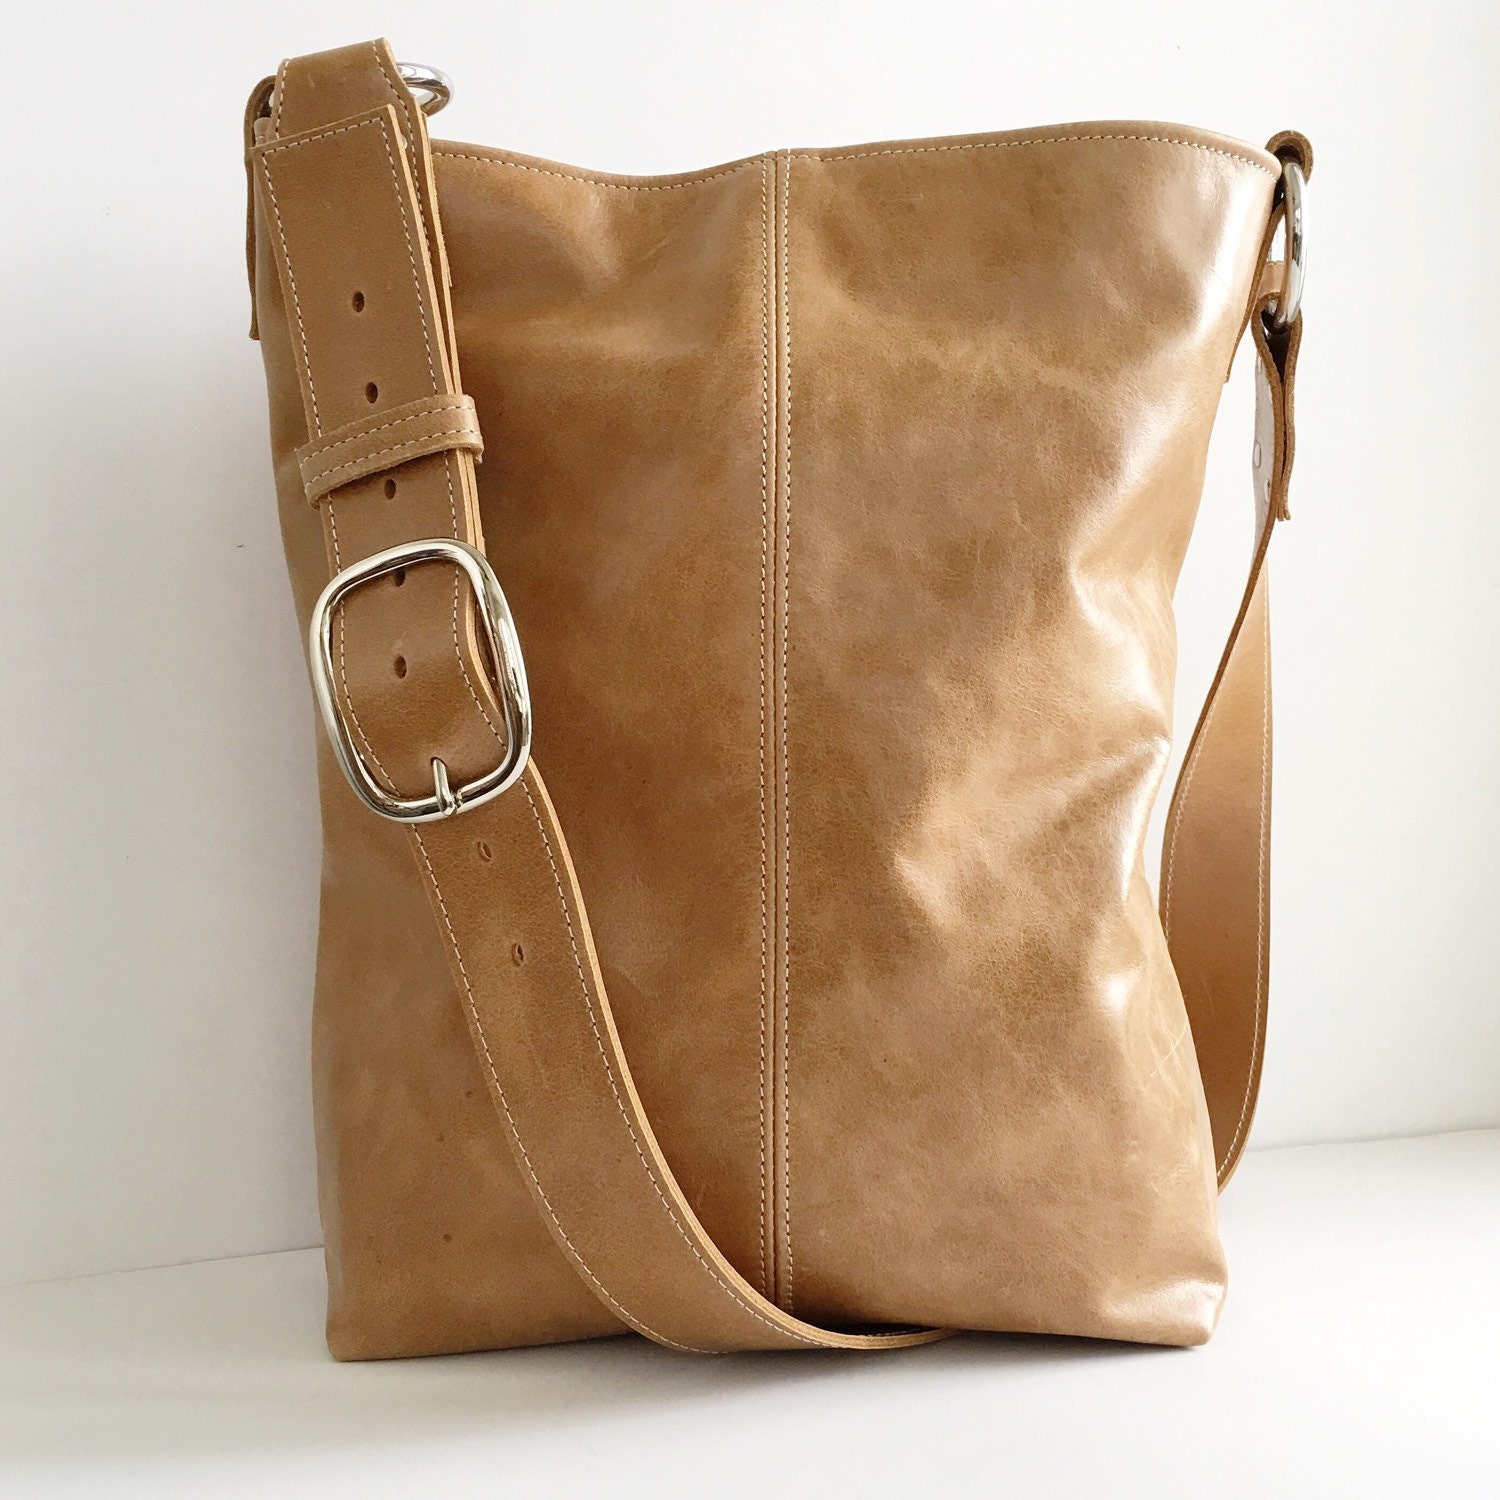 Crossbody Boho Handbags For Sale Keweenaw Bay Indian Community 